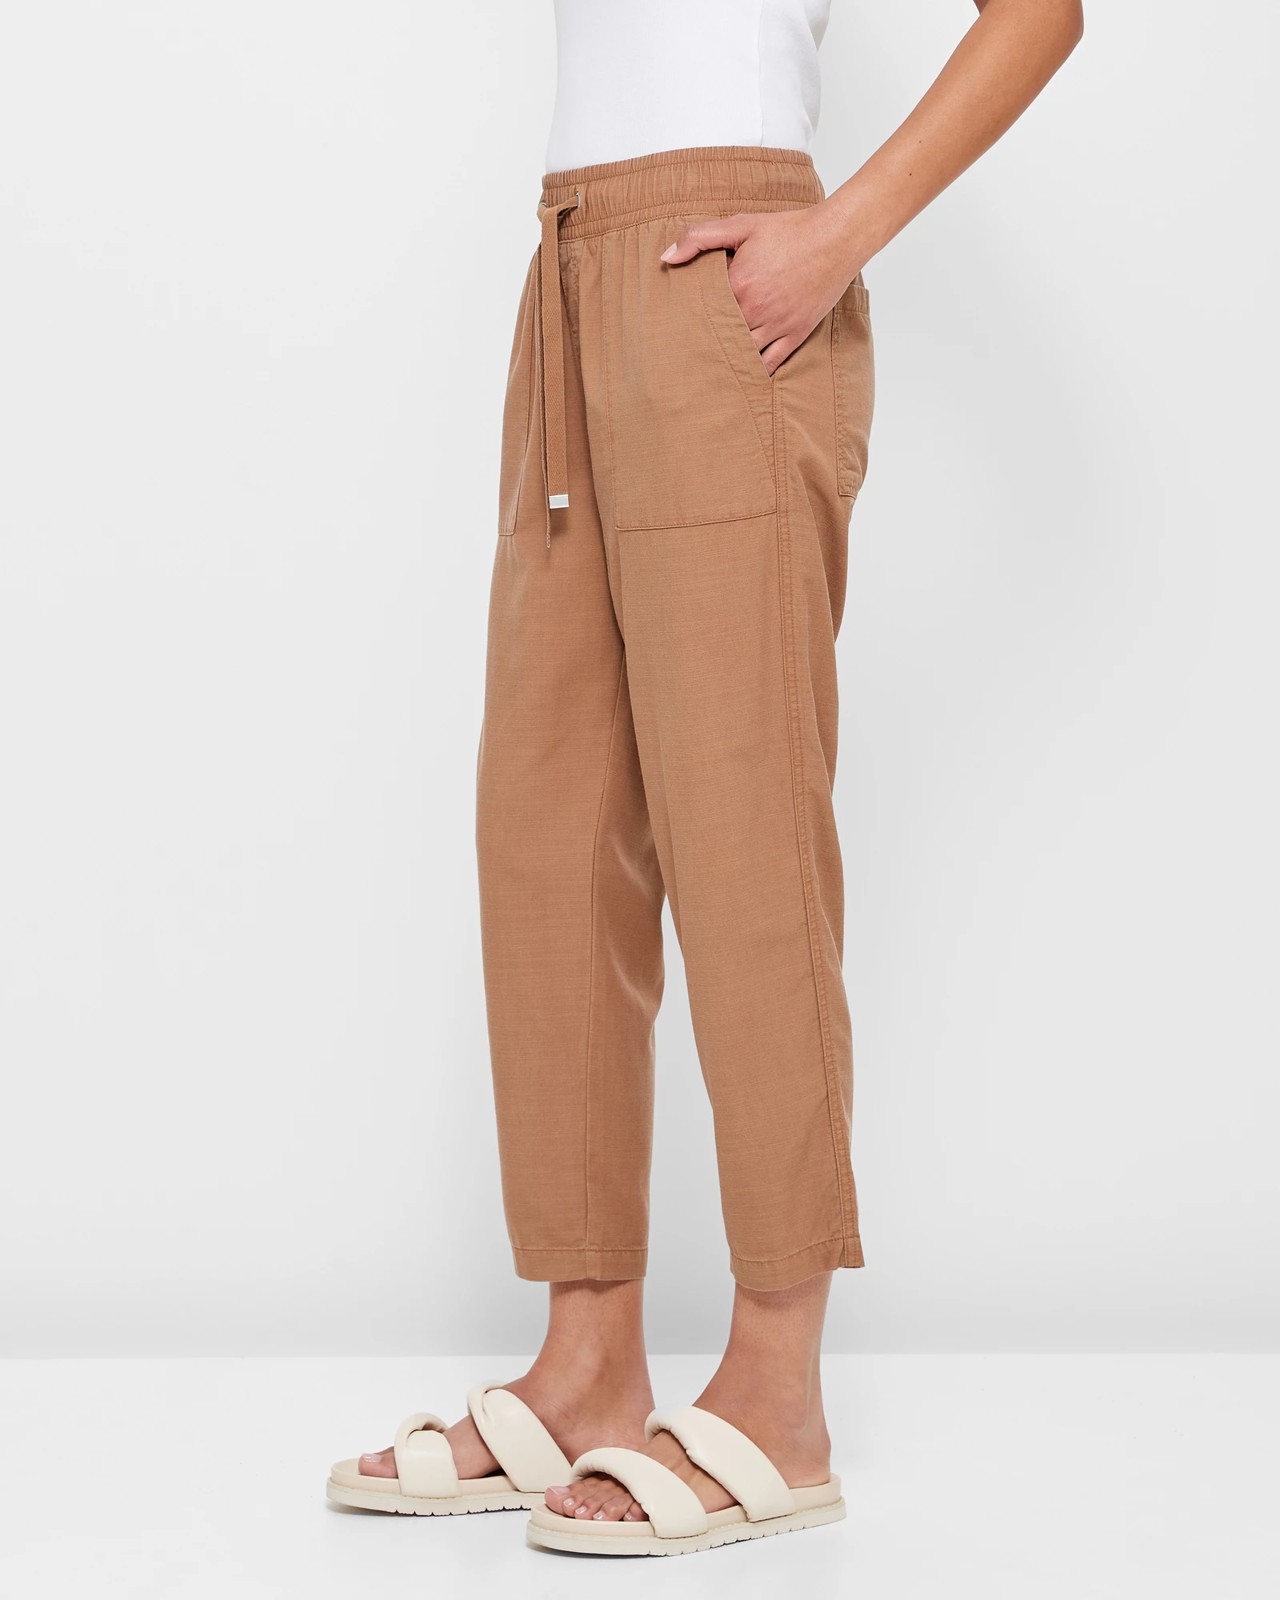 Loose Fit Cotton Pants : Target